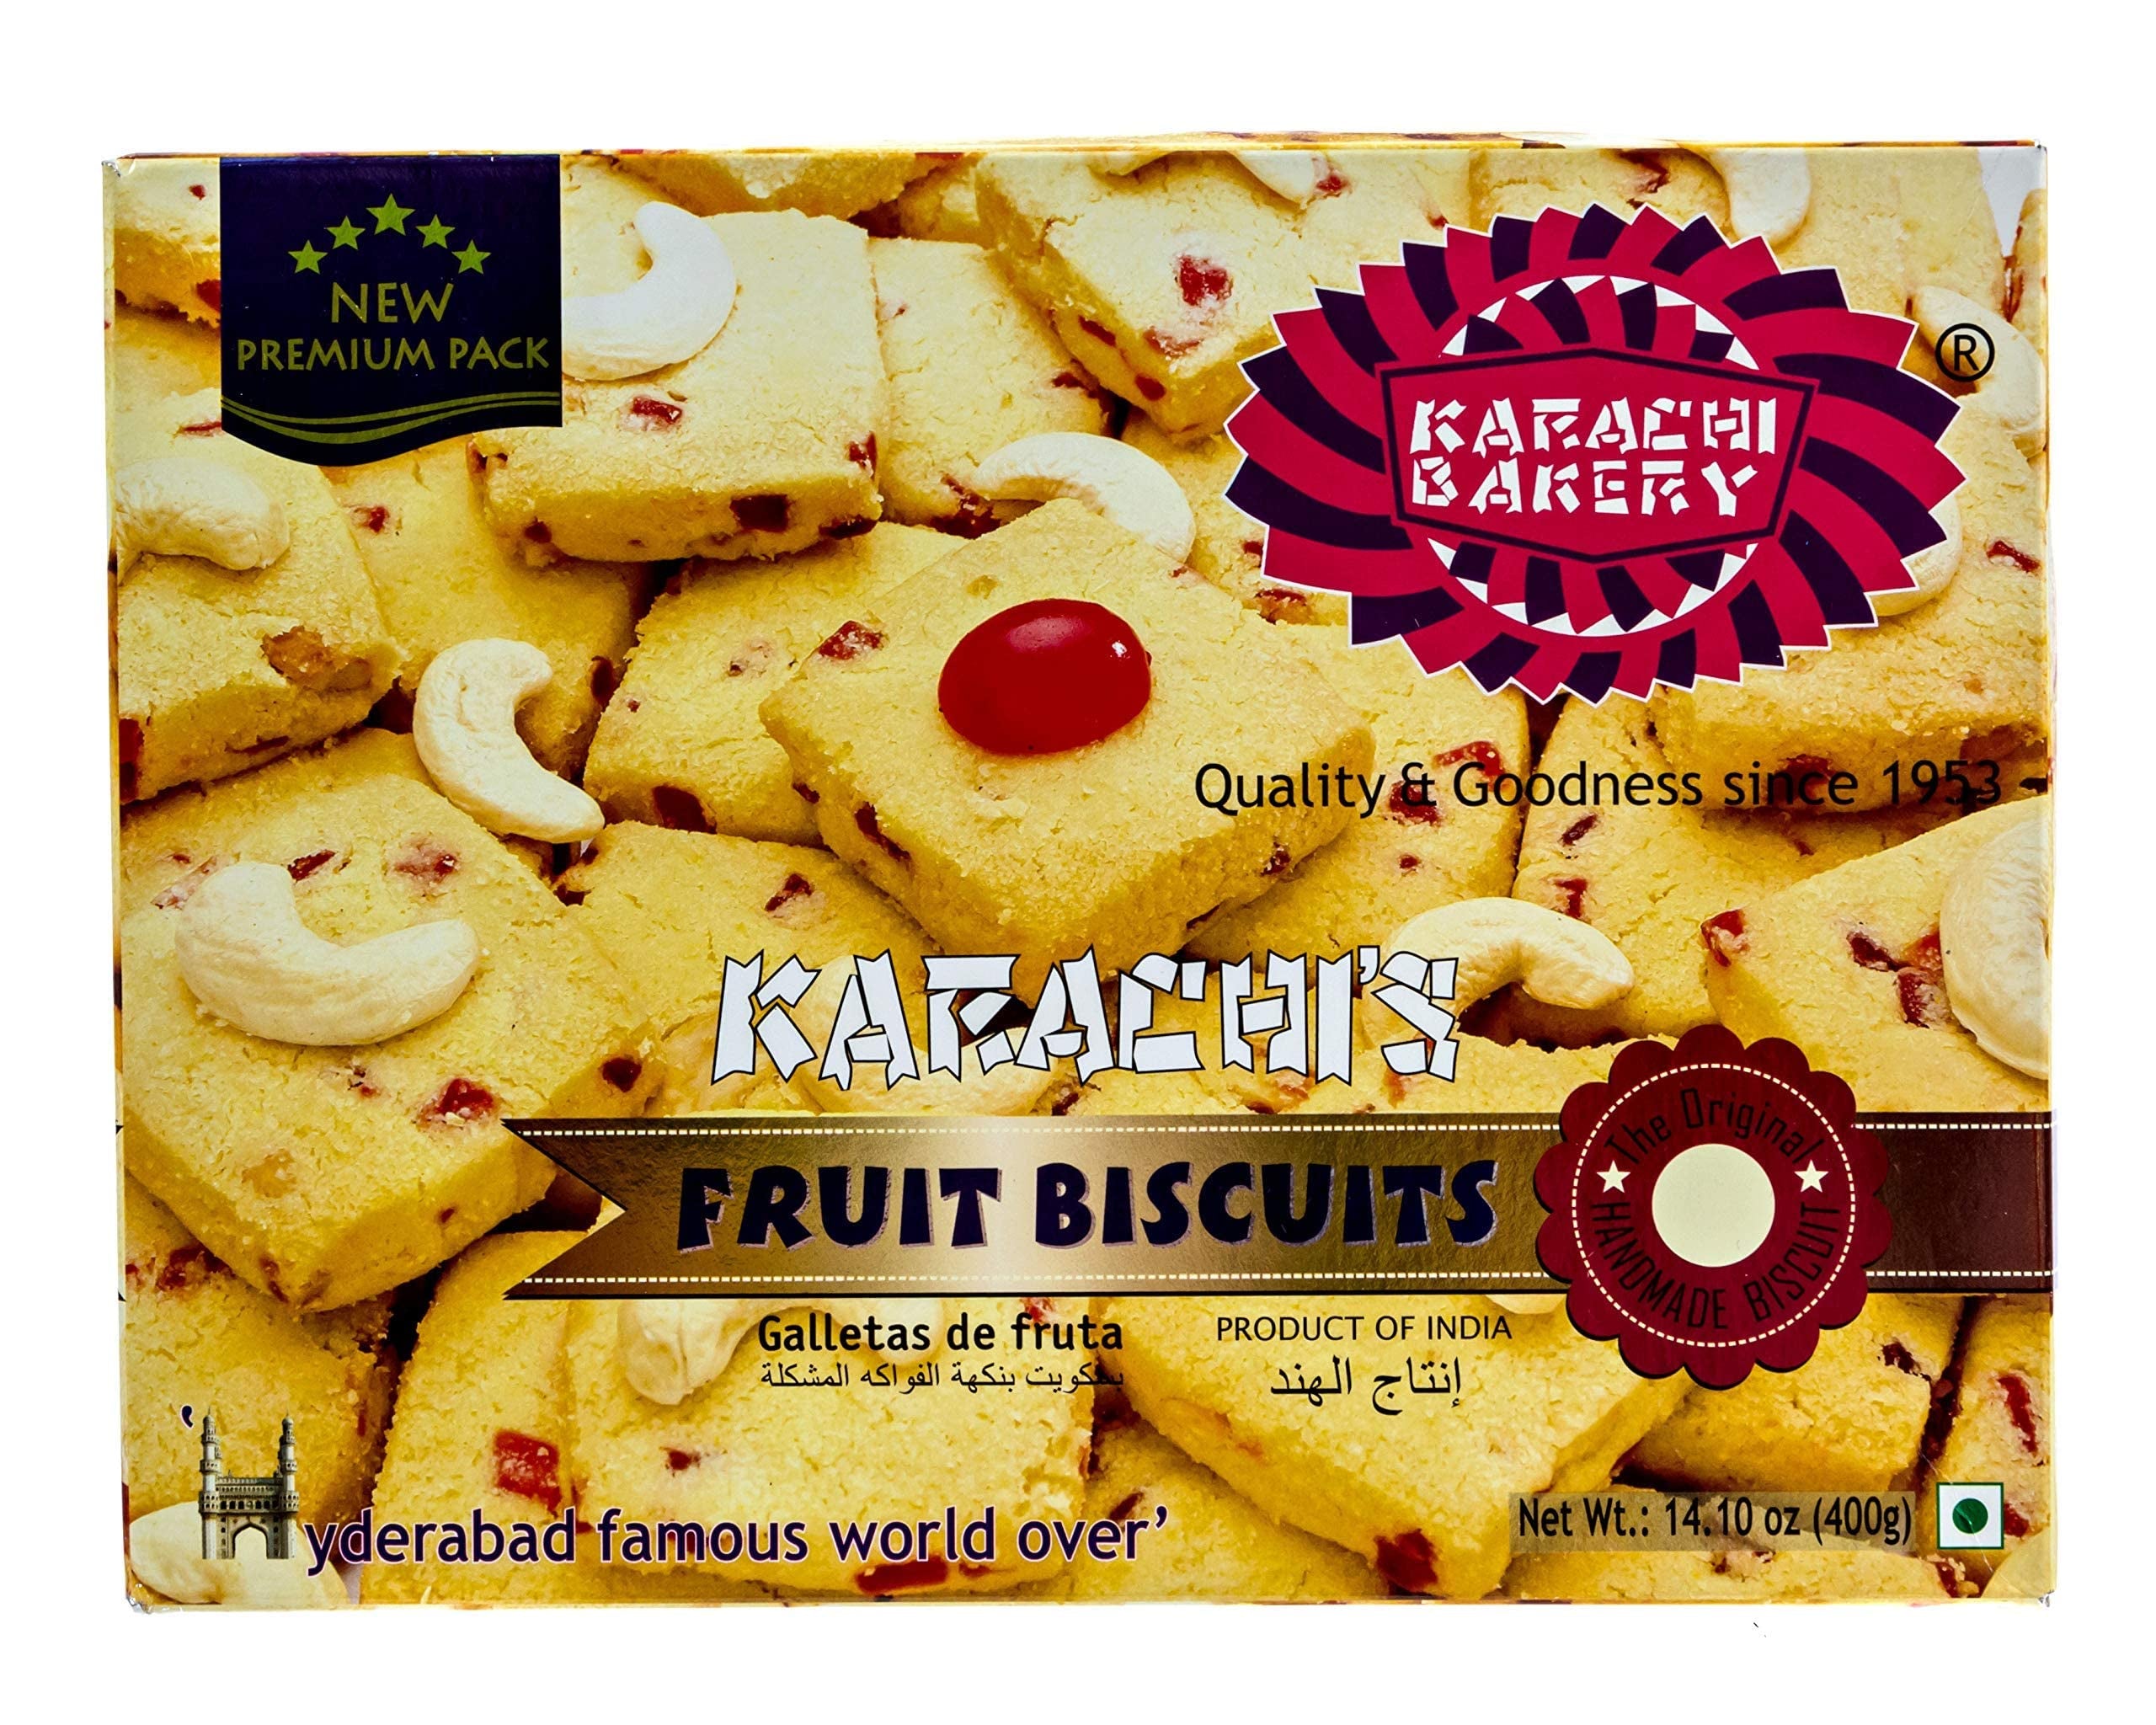 Karachi Bakery - Fruit Biscuits 400g